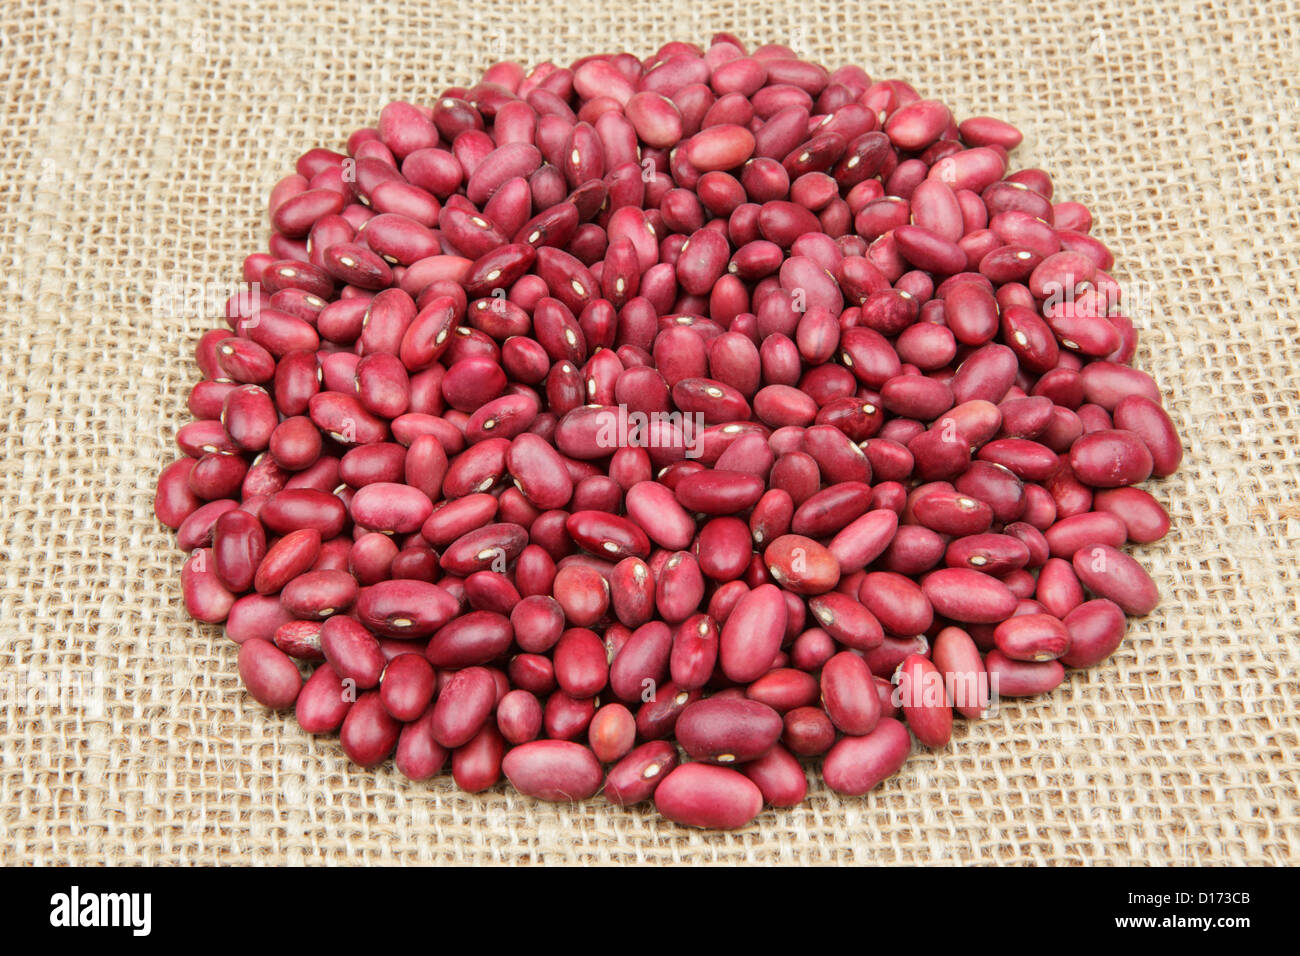 Red kidney beans on hemp cloth Stock Photo